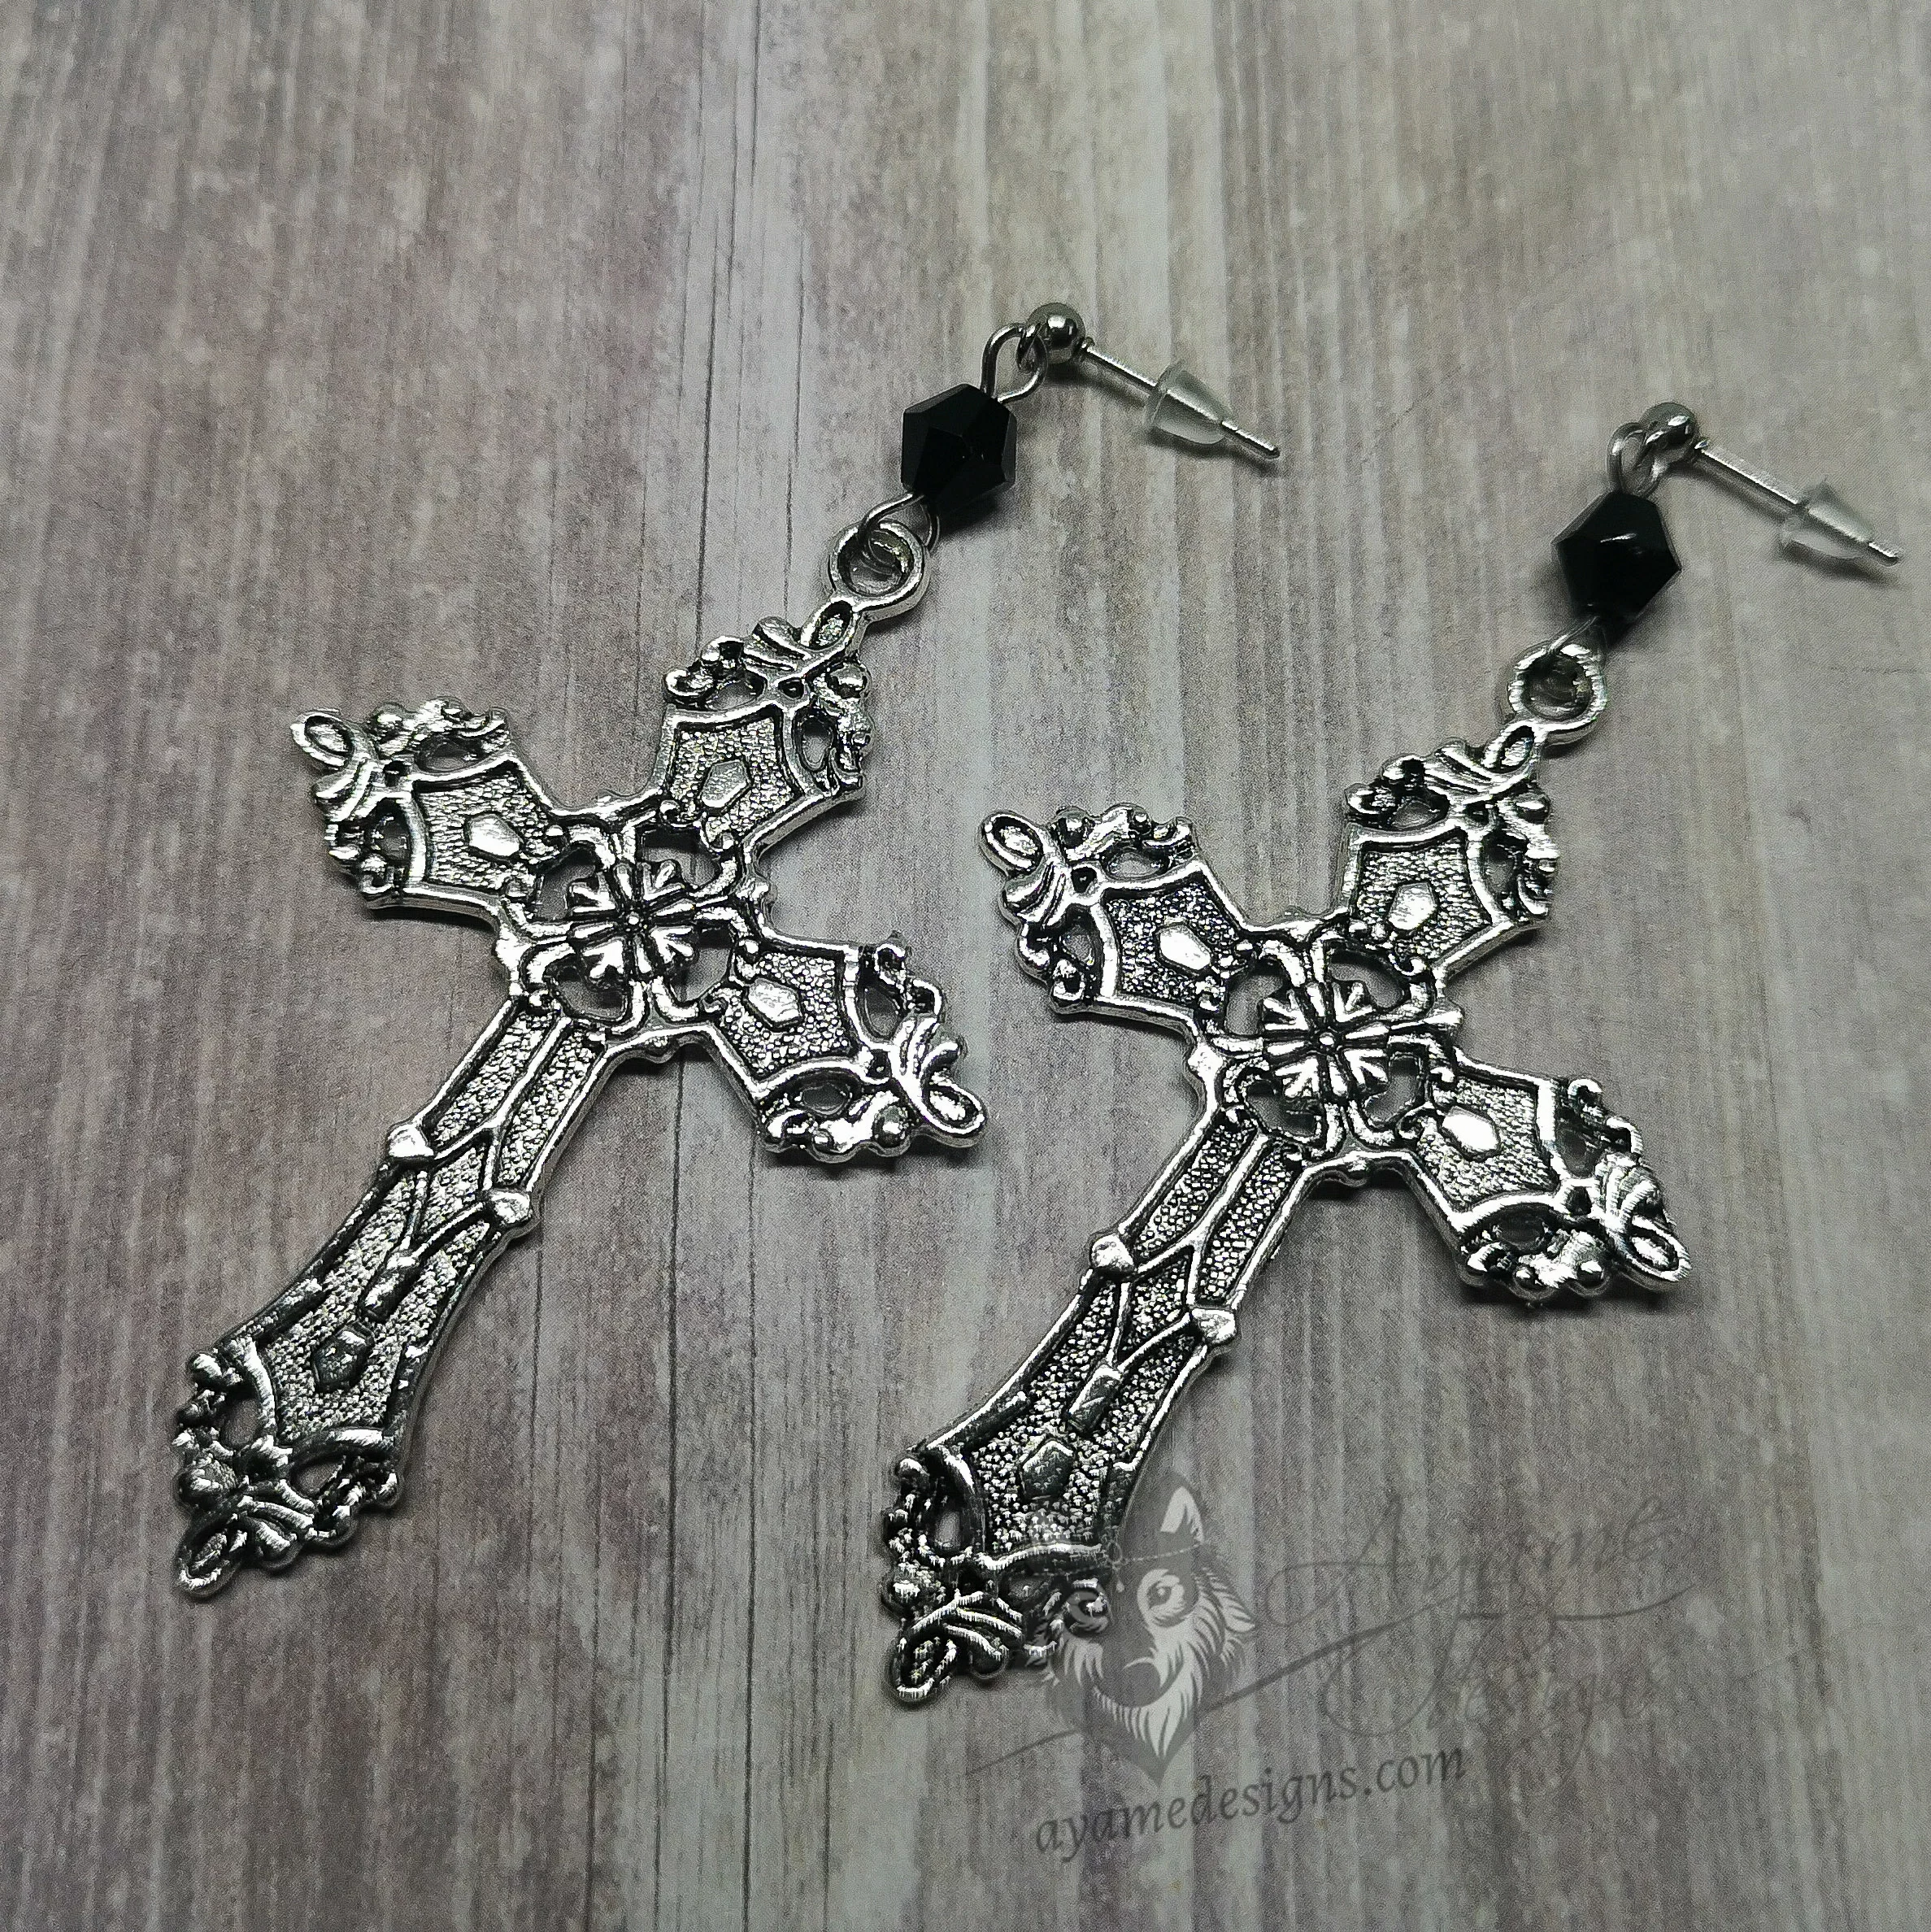 Handmade gothic Byzantine cross earrings with black Austrian crystal beads on stainless steel stud earrings